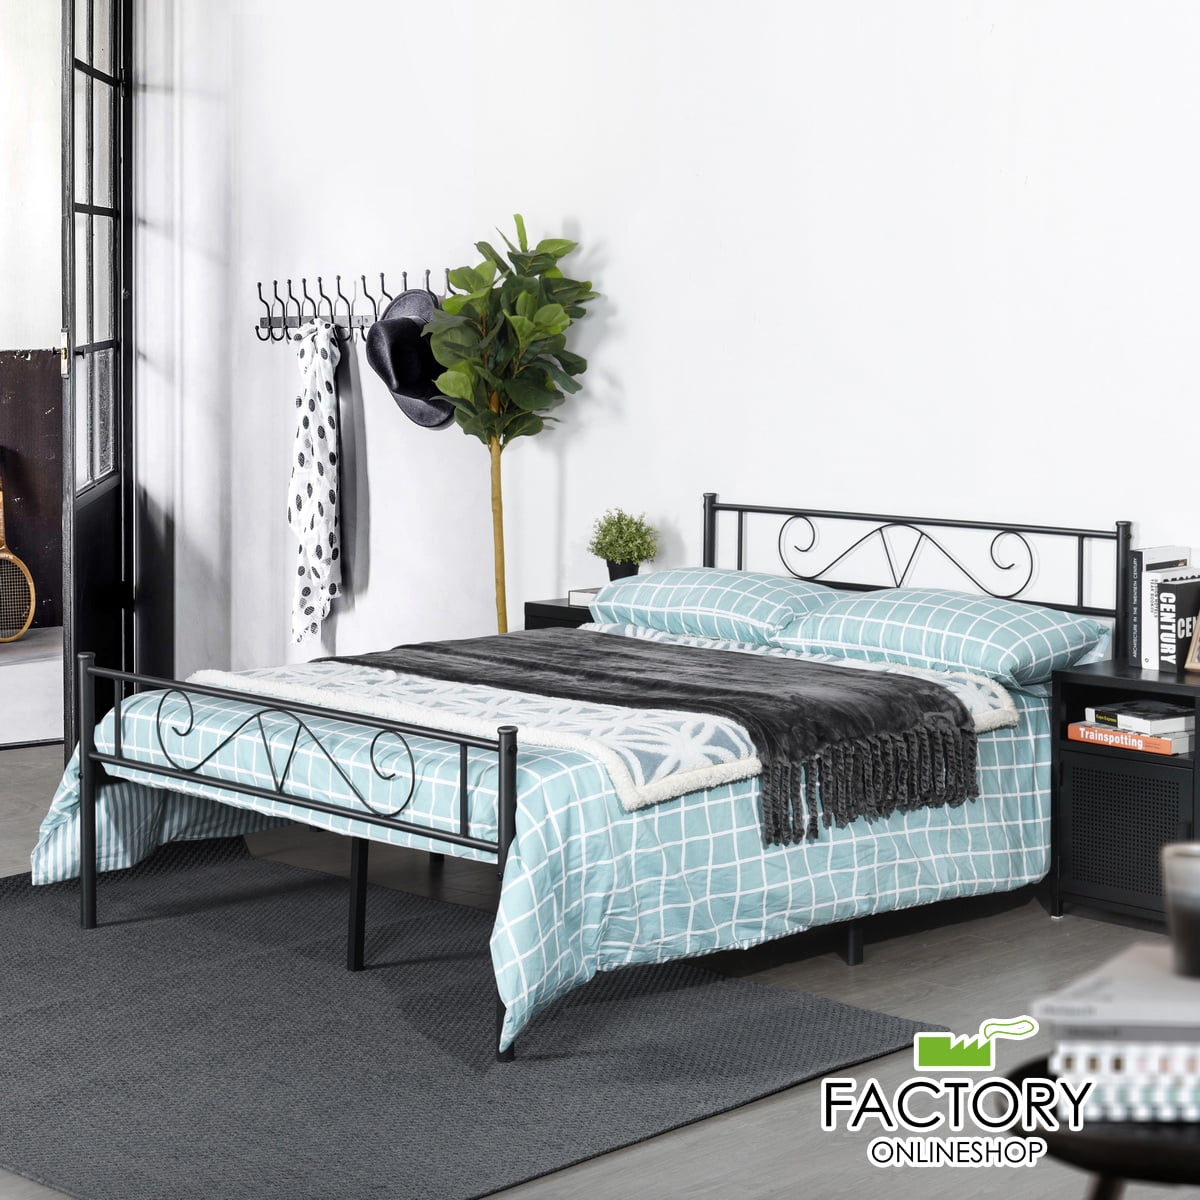 Geniqua Full Size Bed Frame Black Steel, Bed Frame Full Size Headboard Footboard